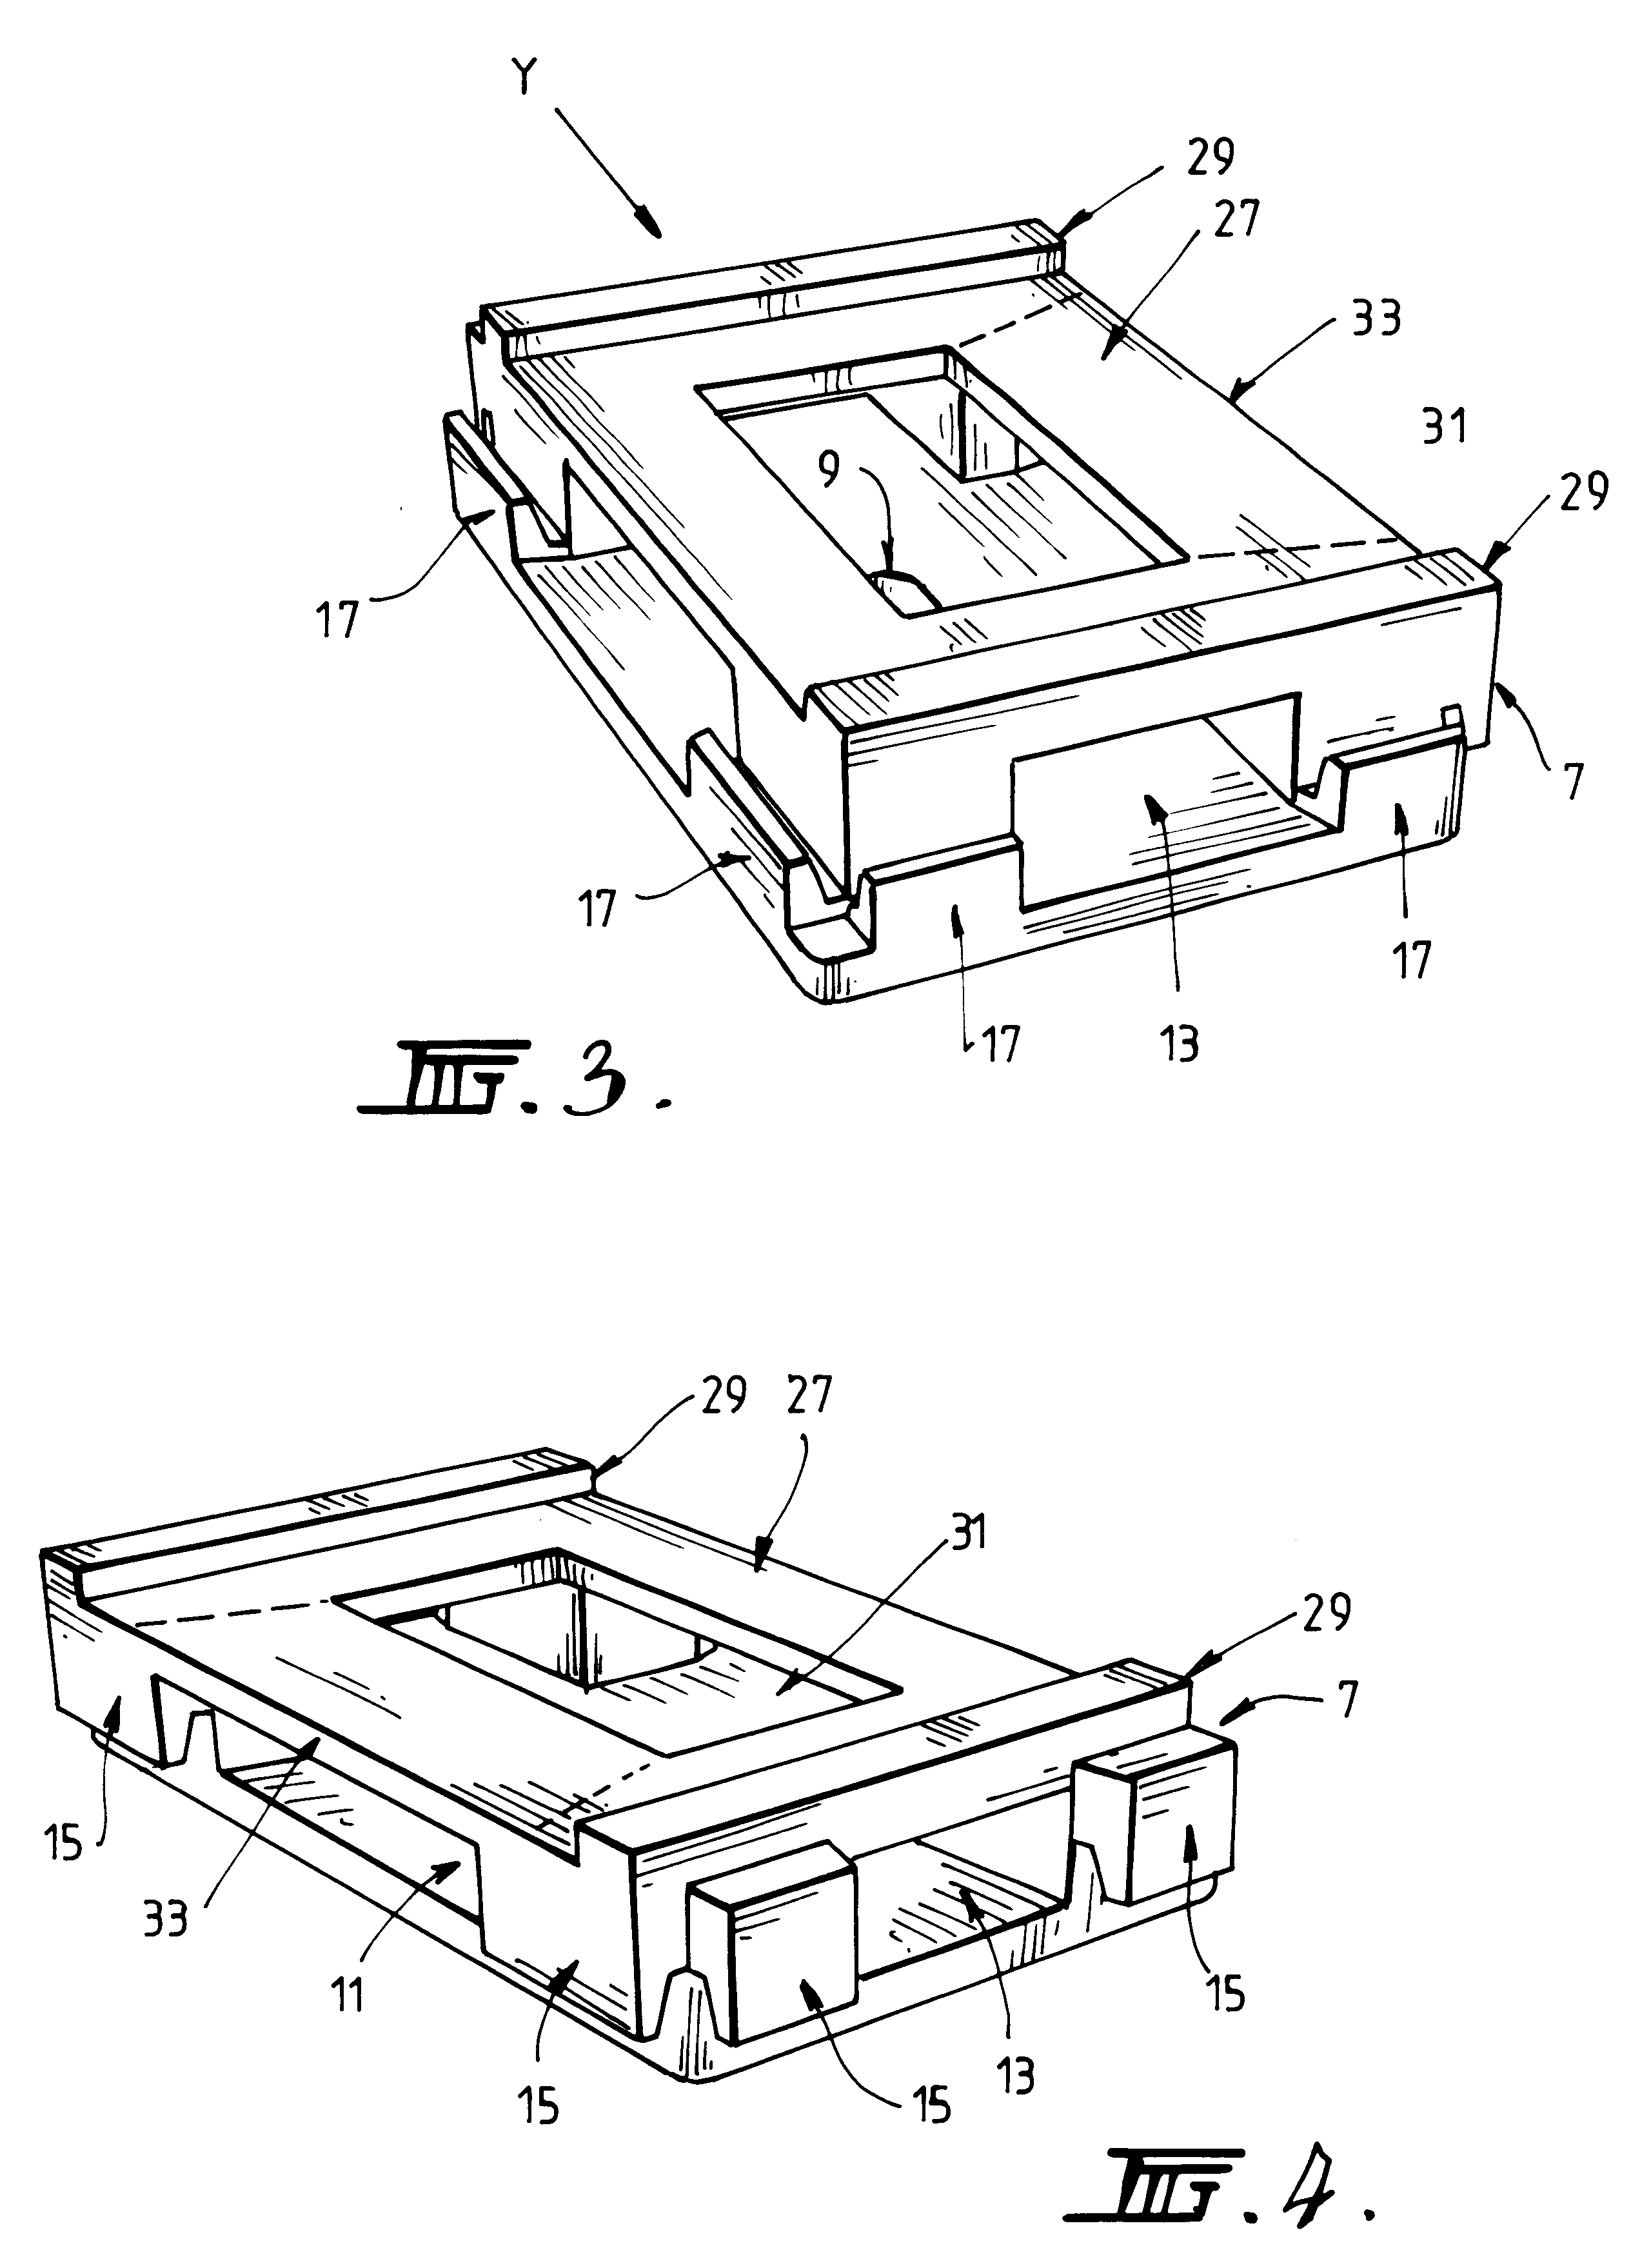 Modular pallet structure